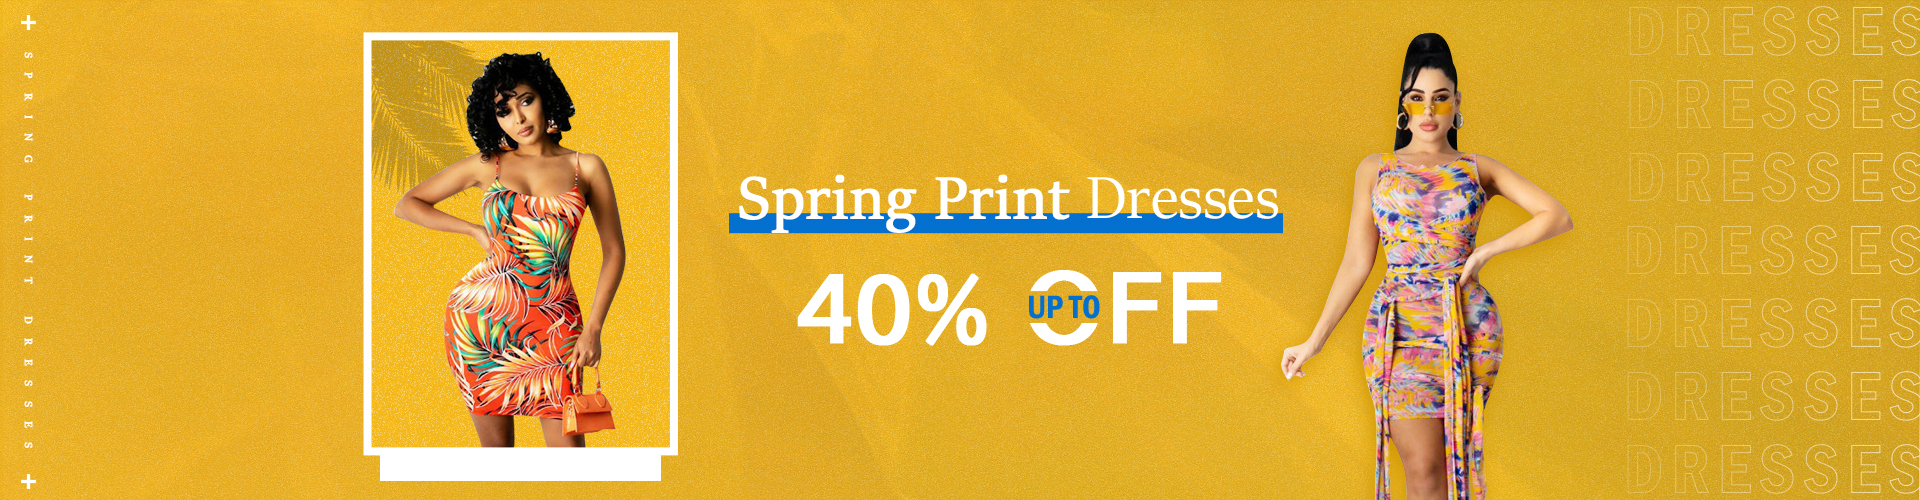 Spring Print Dresses